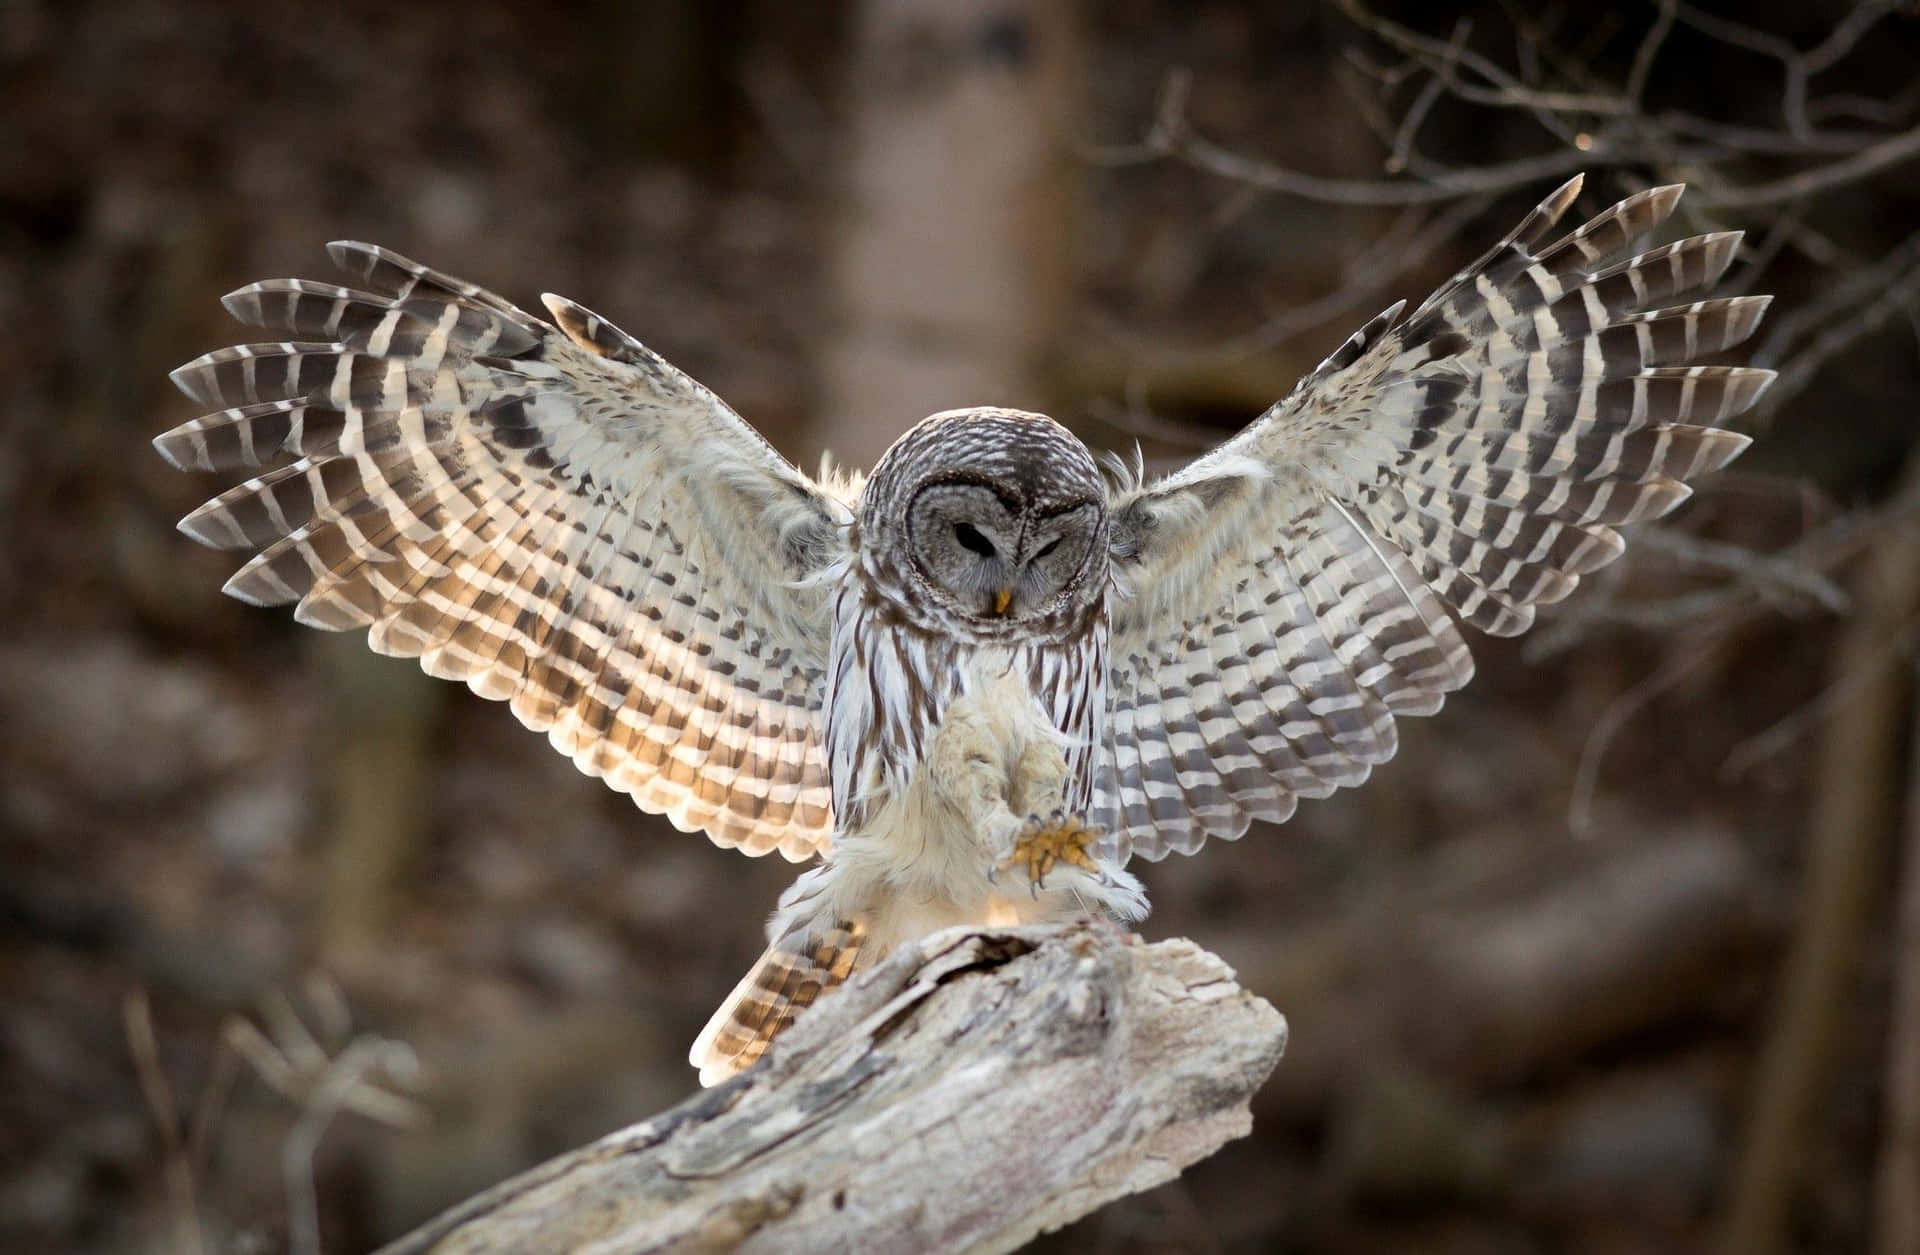 A wise horned owl surveys its kingdom